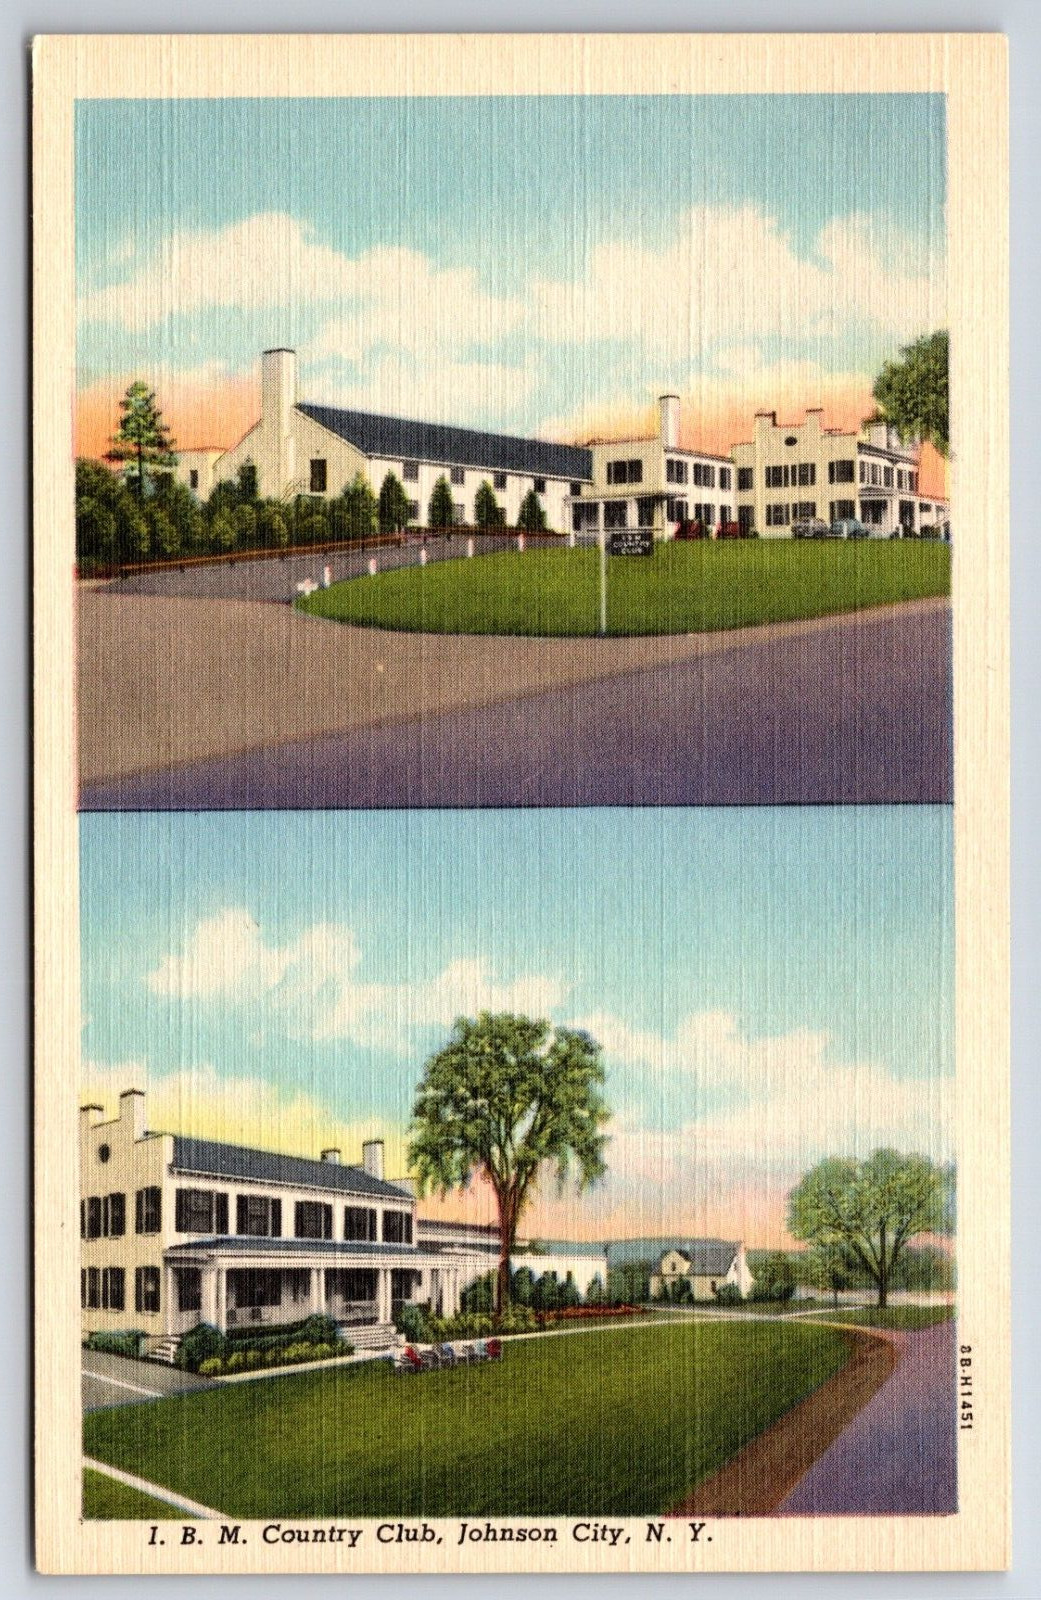 I.B.M. Country Club Multi View c1948 Johnson City New York CURT TEICH Postcard